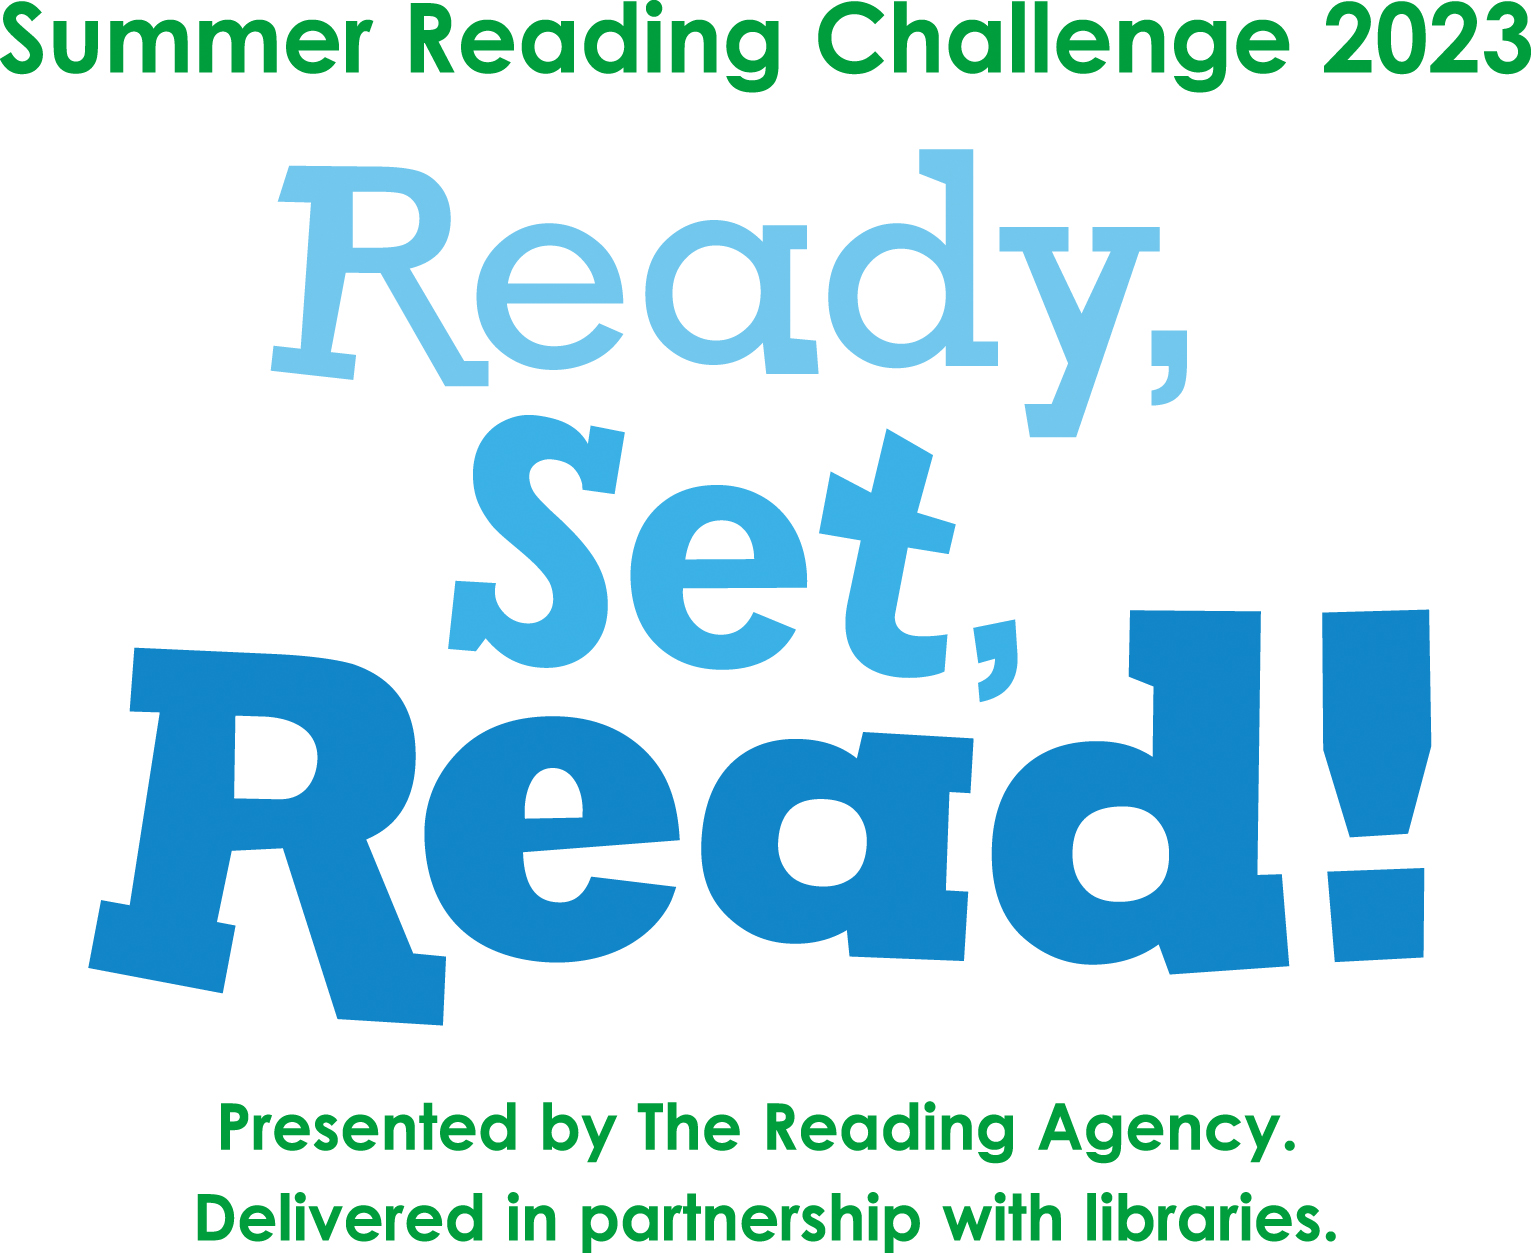 Summer Reading Challenge 2023 logo